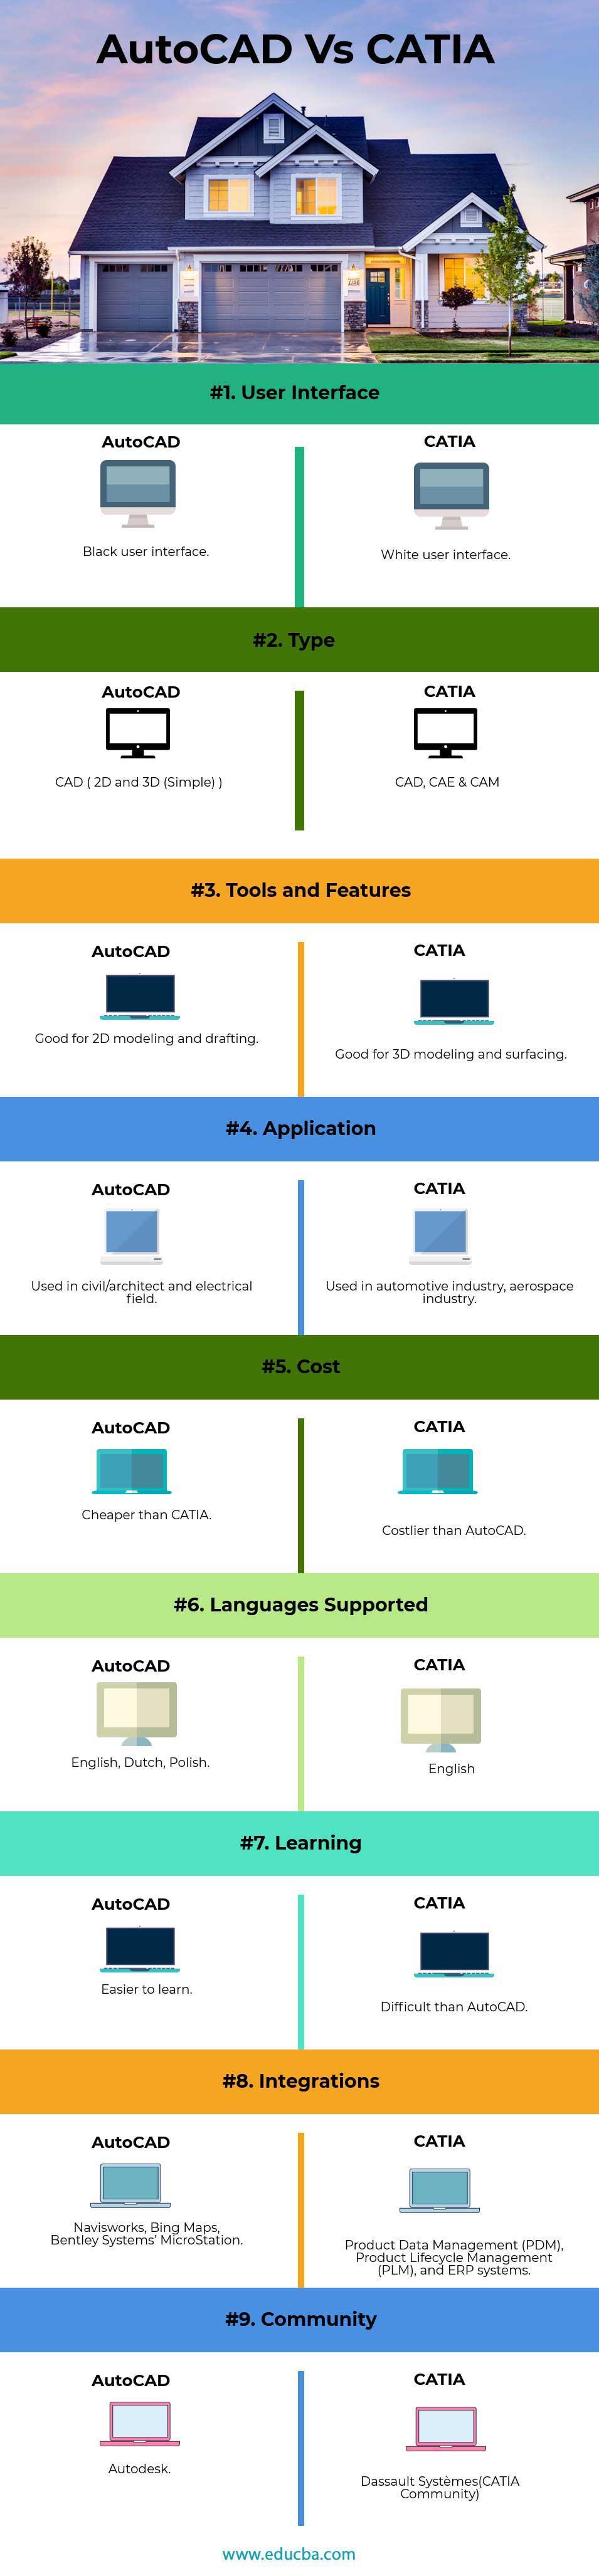 Catia Vs Autocad - A Project Management Software Comparison